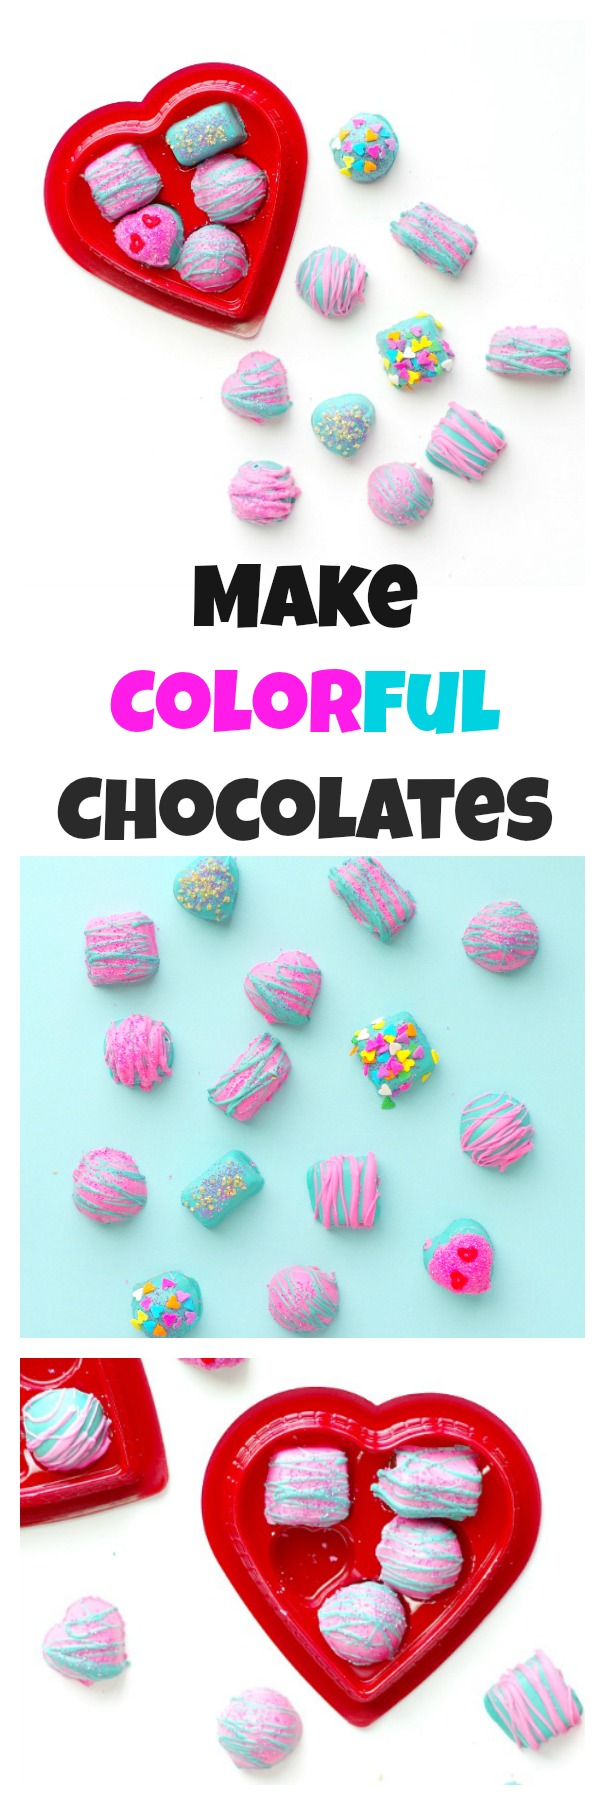 Make Colorful Chocolates